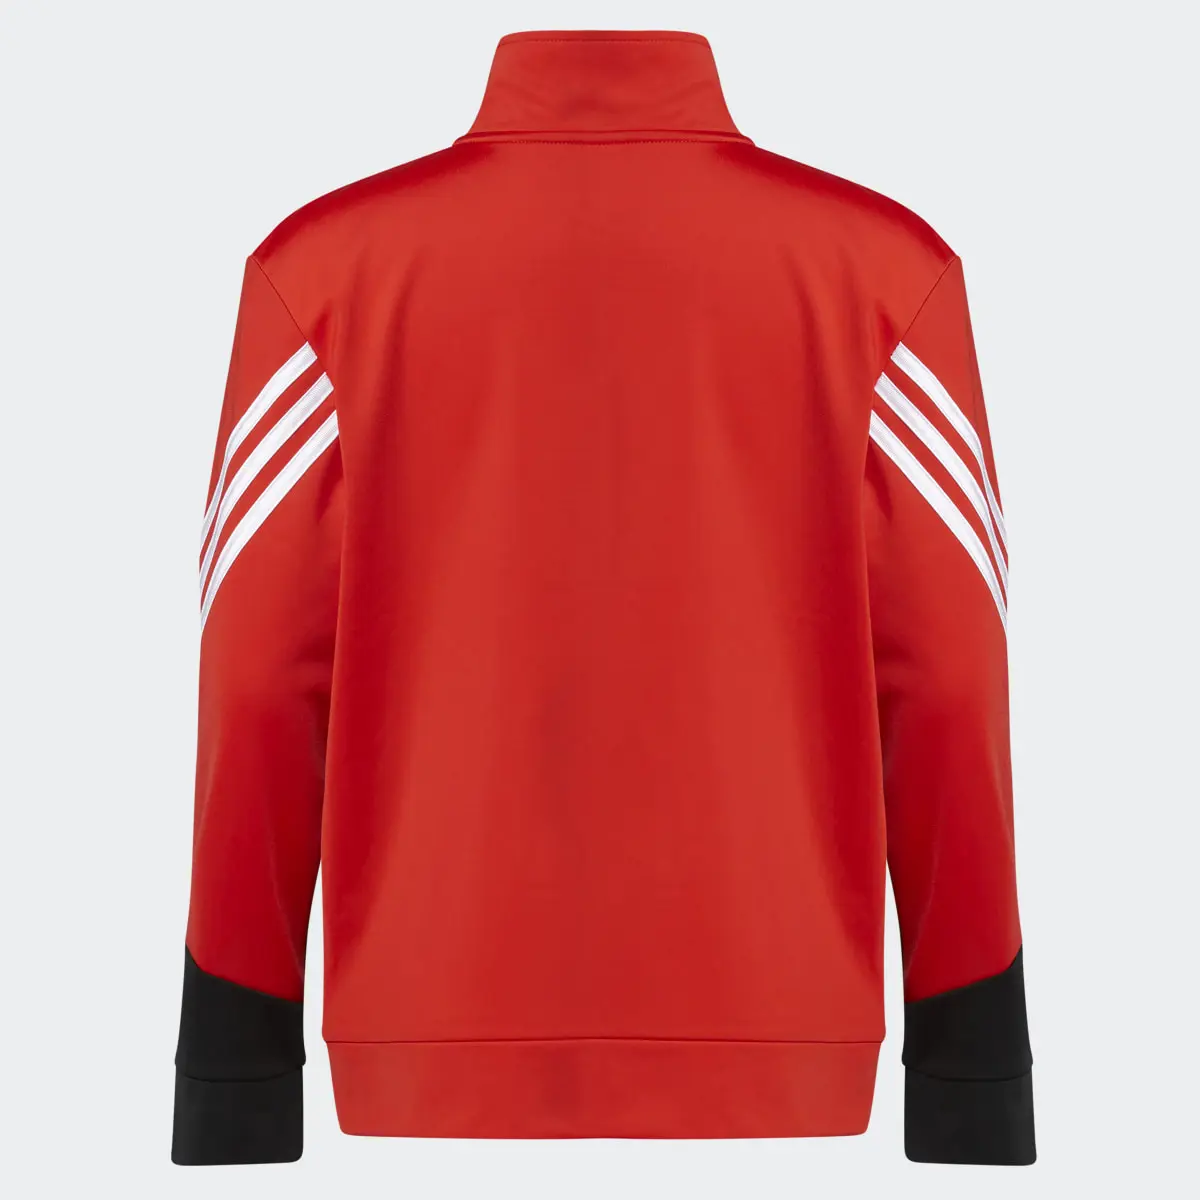 Adidas Bold Tricot Jacket. 3